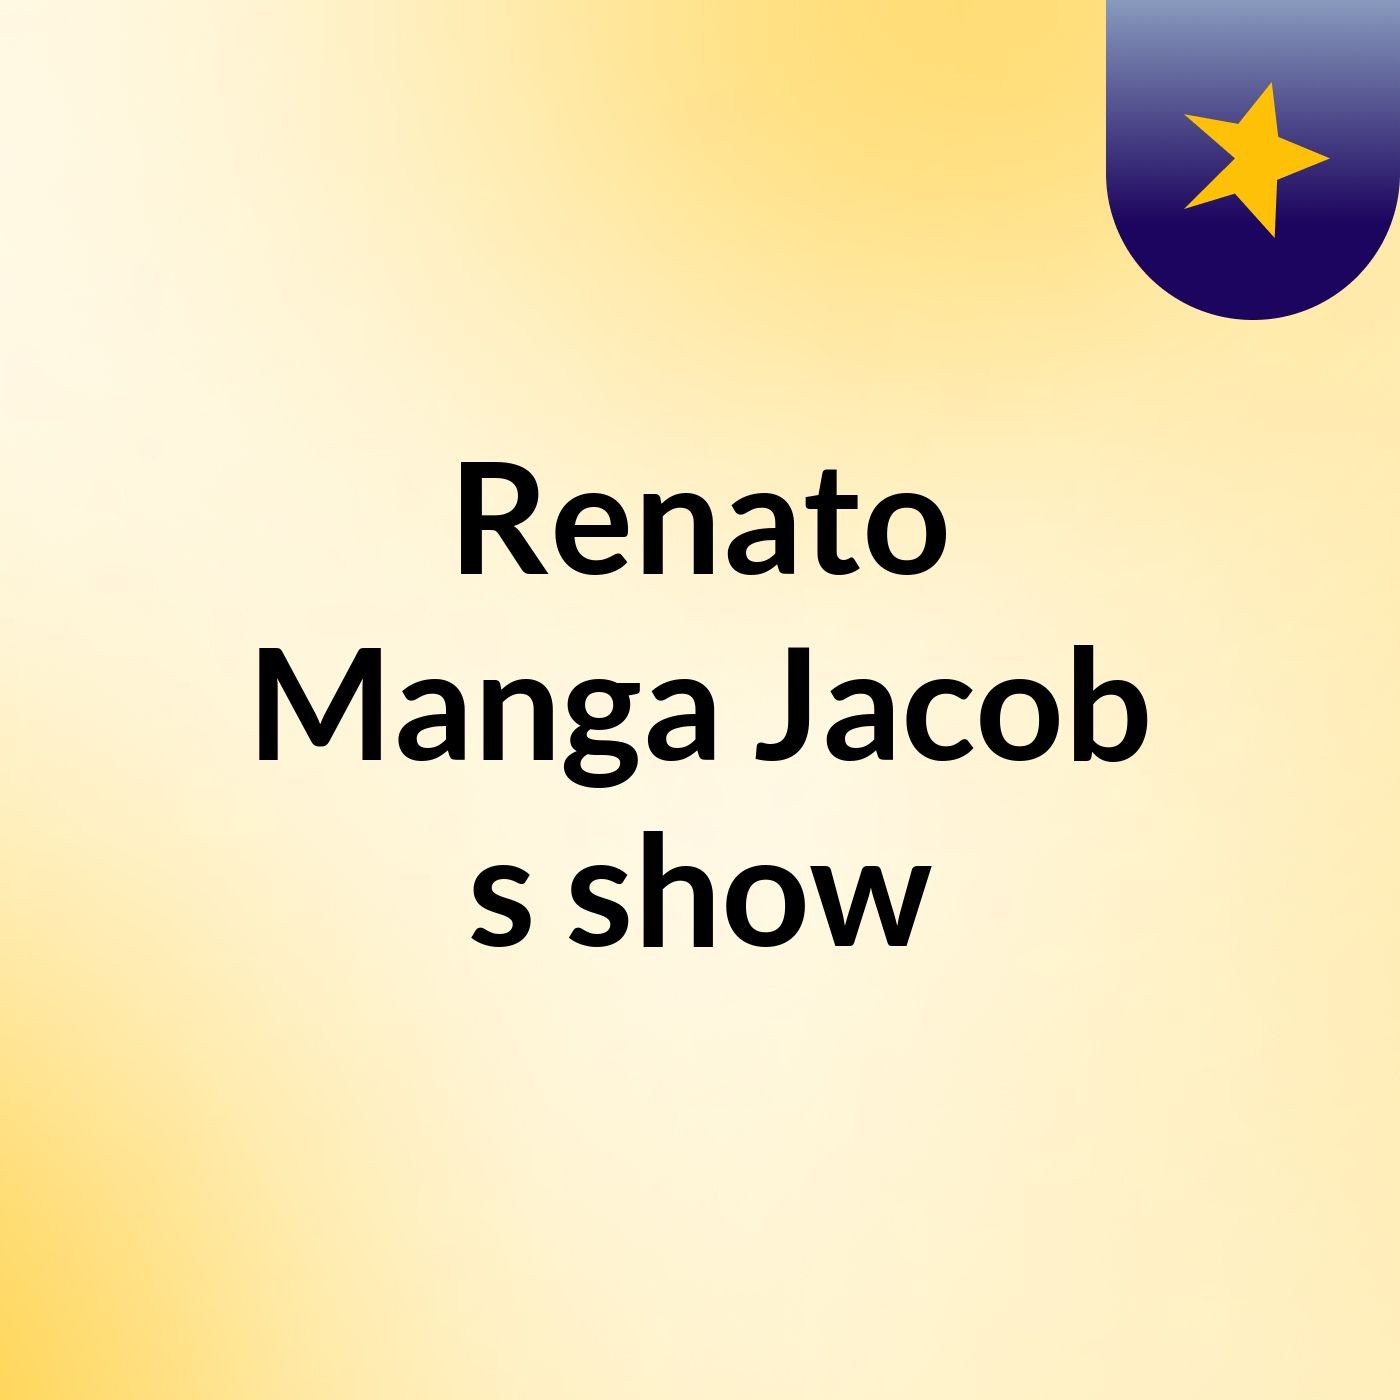 Renato Manga Jacob's show